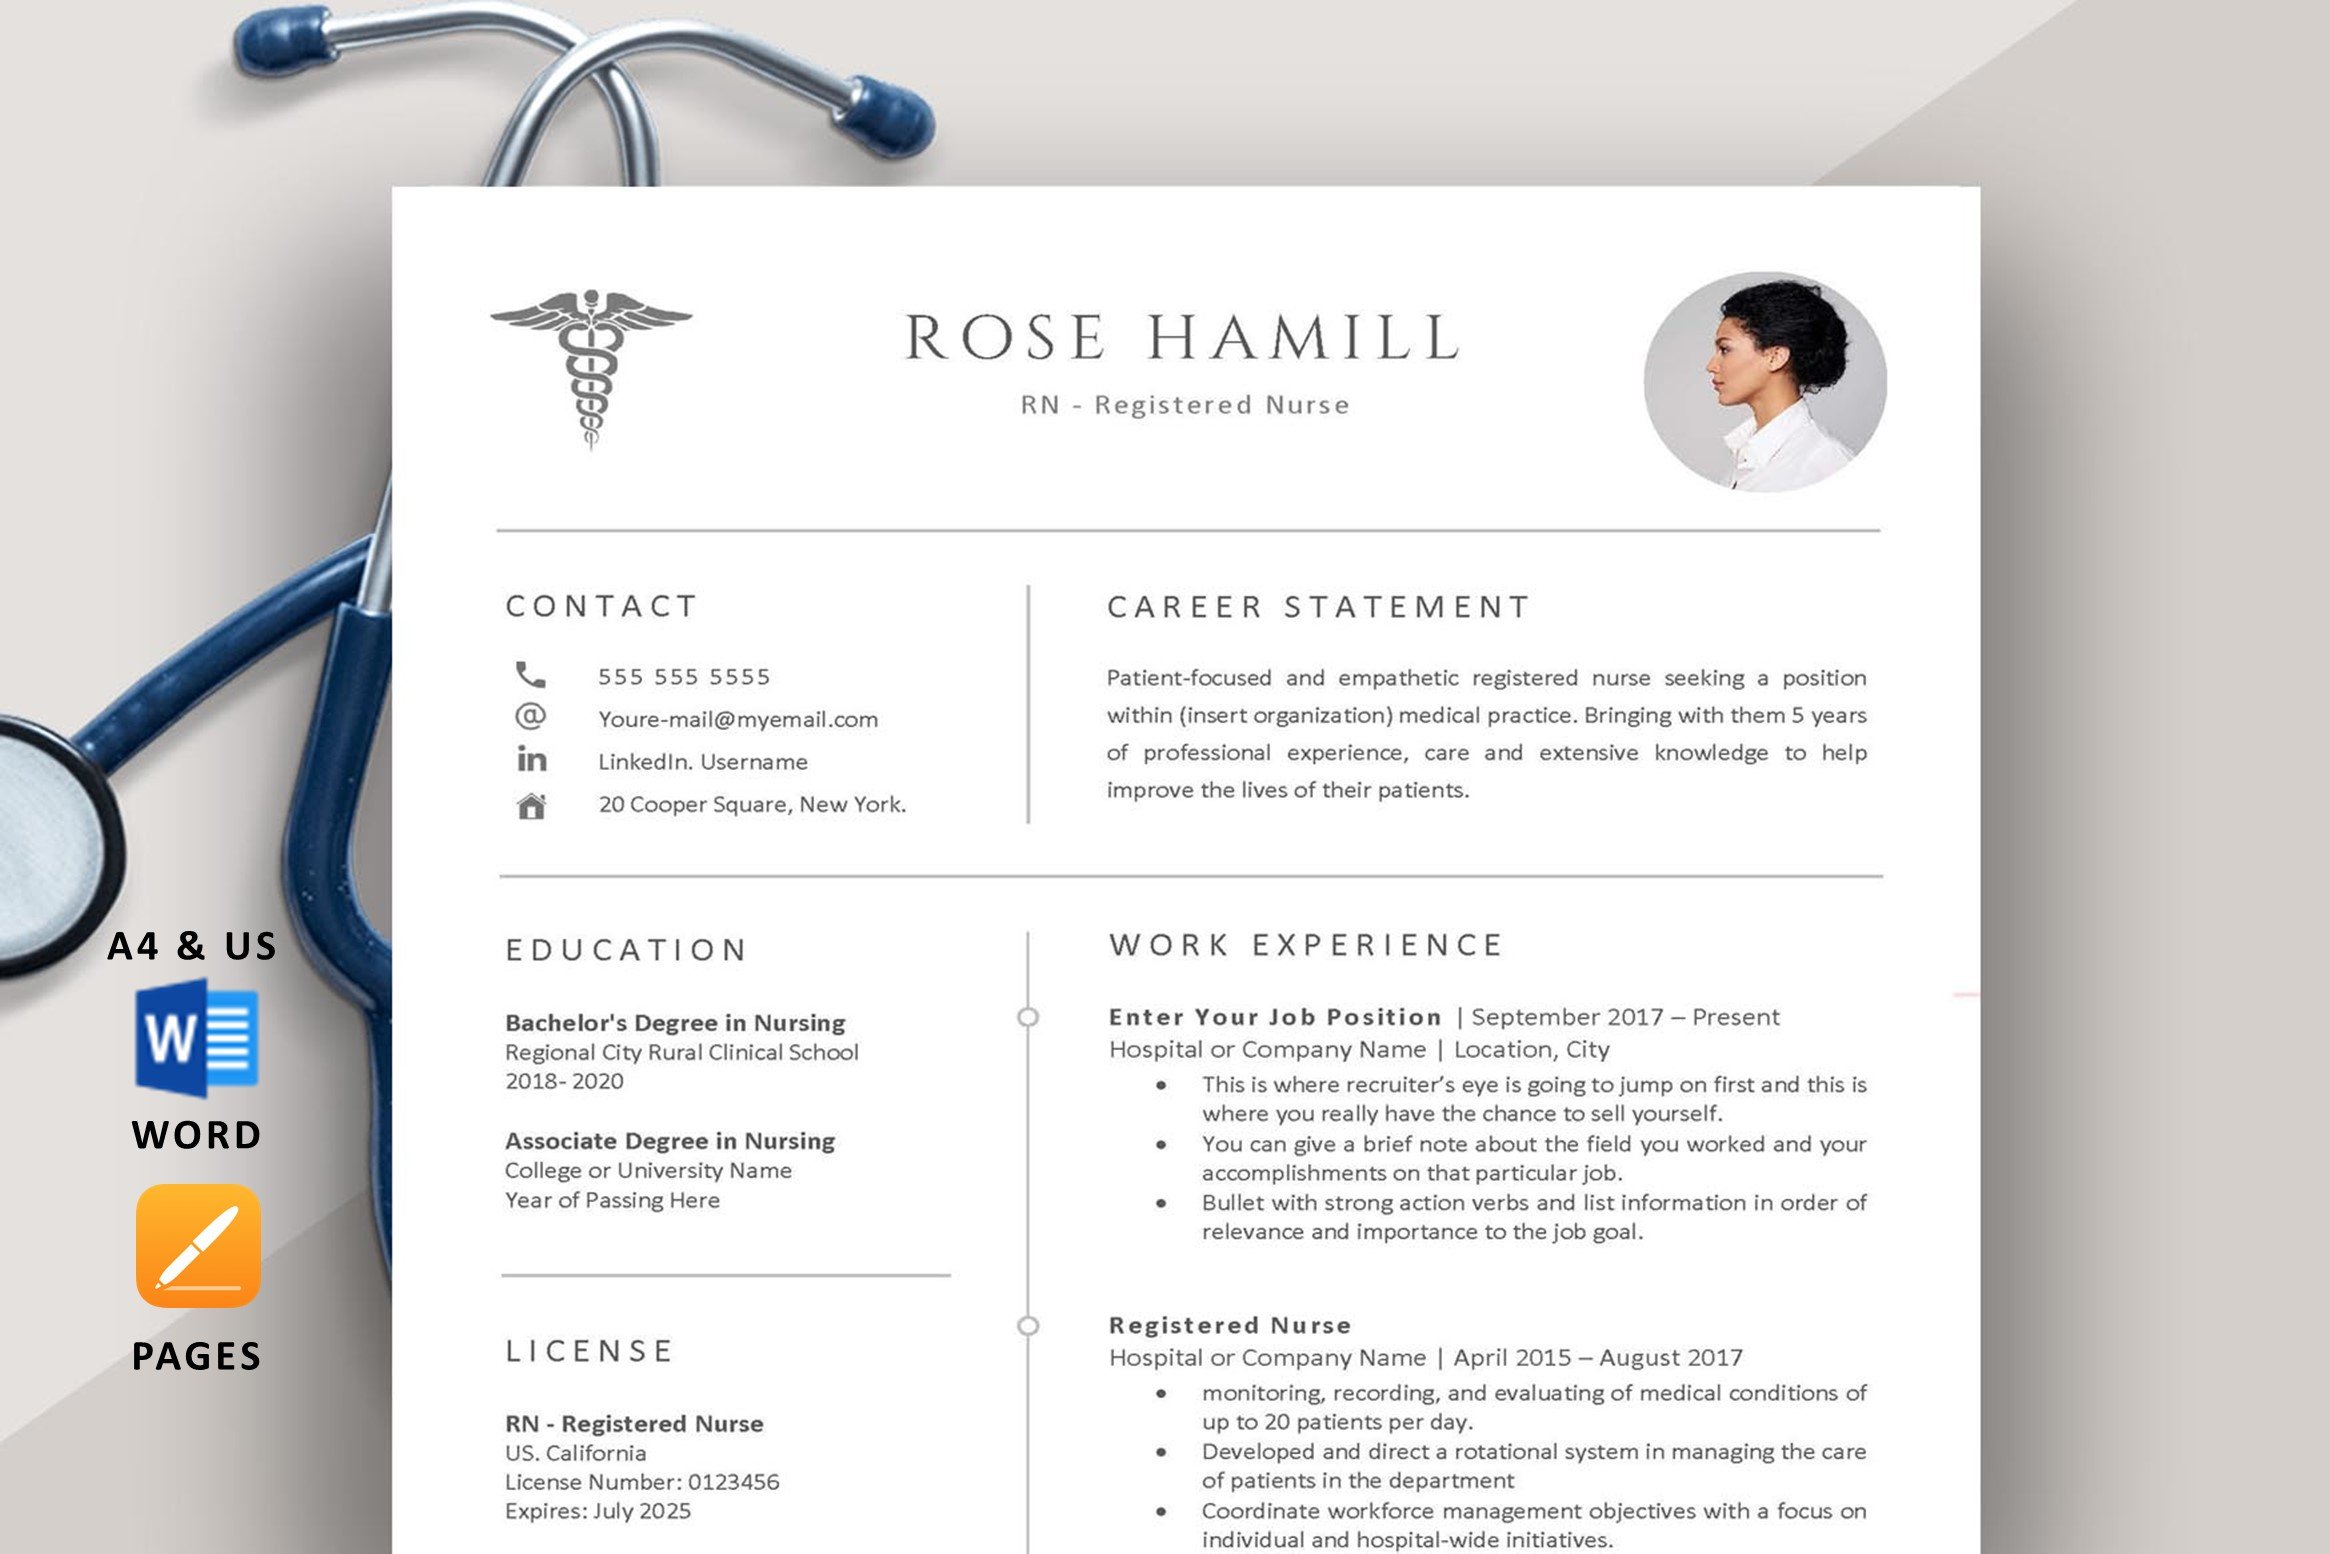 New Grad Nurse resume template cover image.